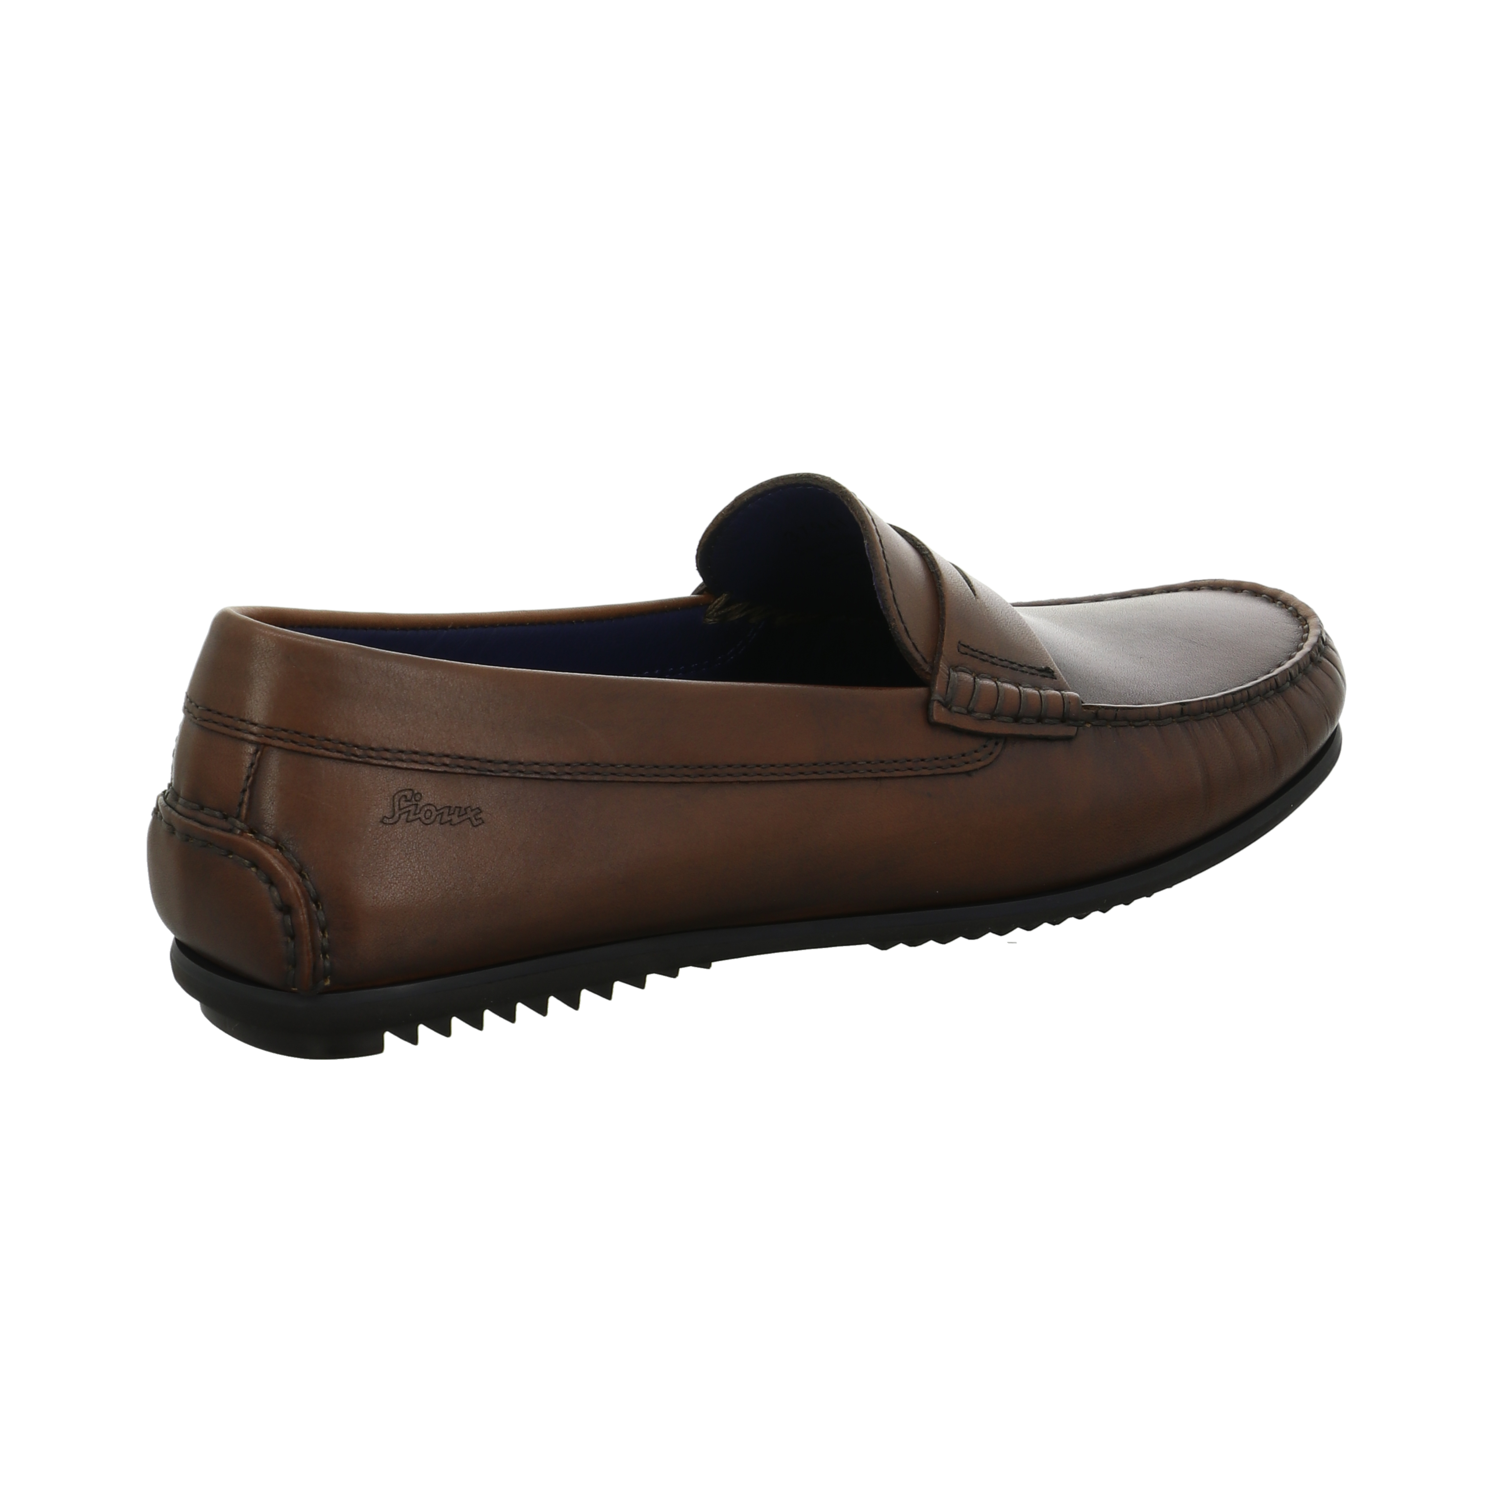 Sioux Schuhe GmbH Slipper sportiv braun / dunkel-braun